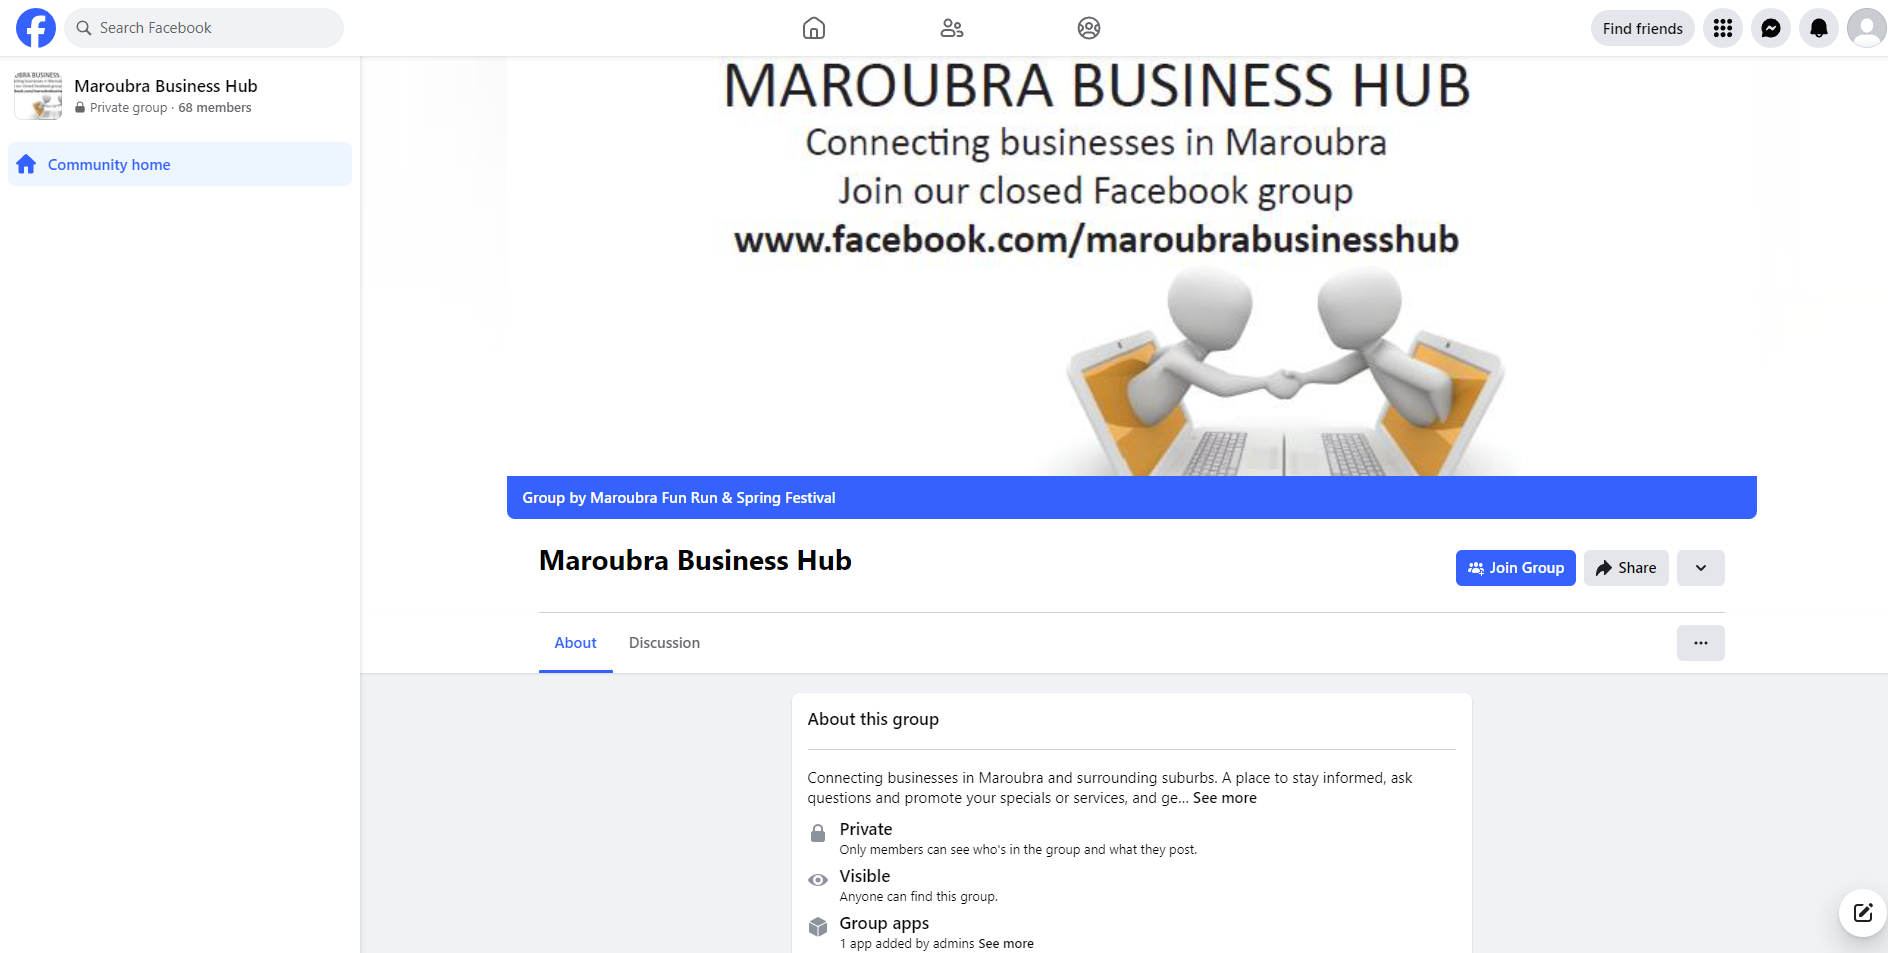 Maroubra Business Hub